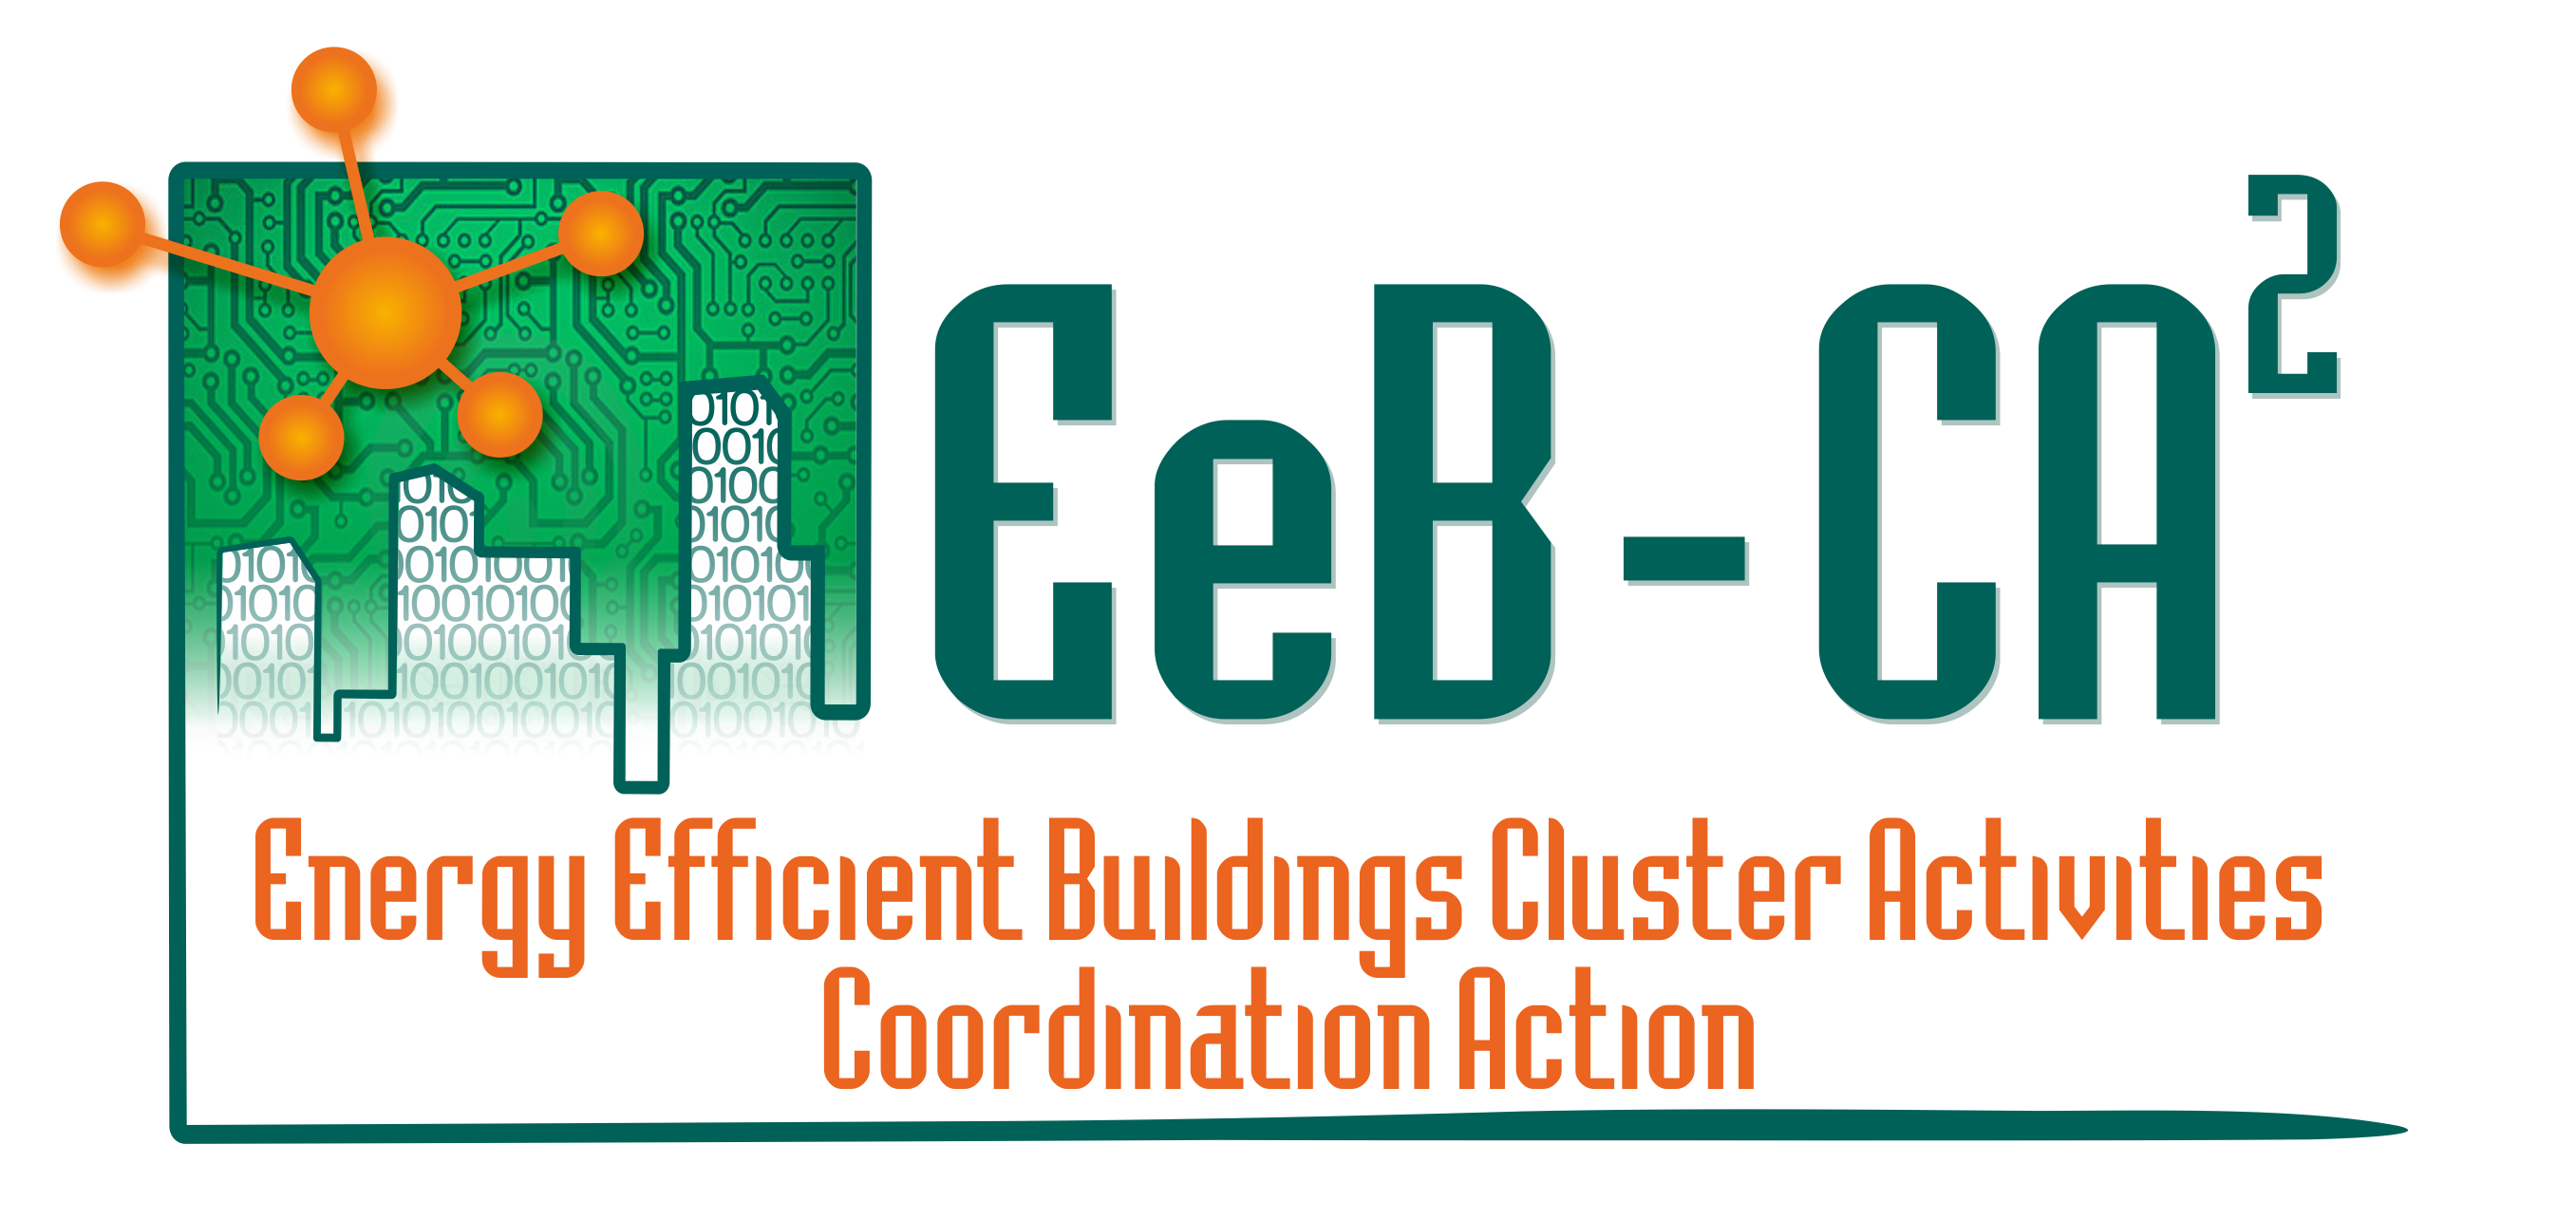 Energy efficient buildings Cluster Activities Coordination Action